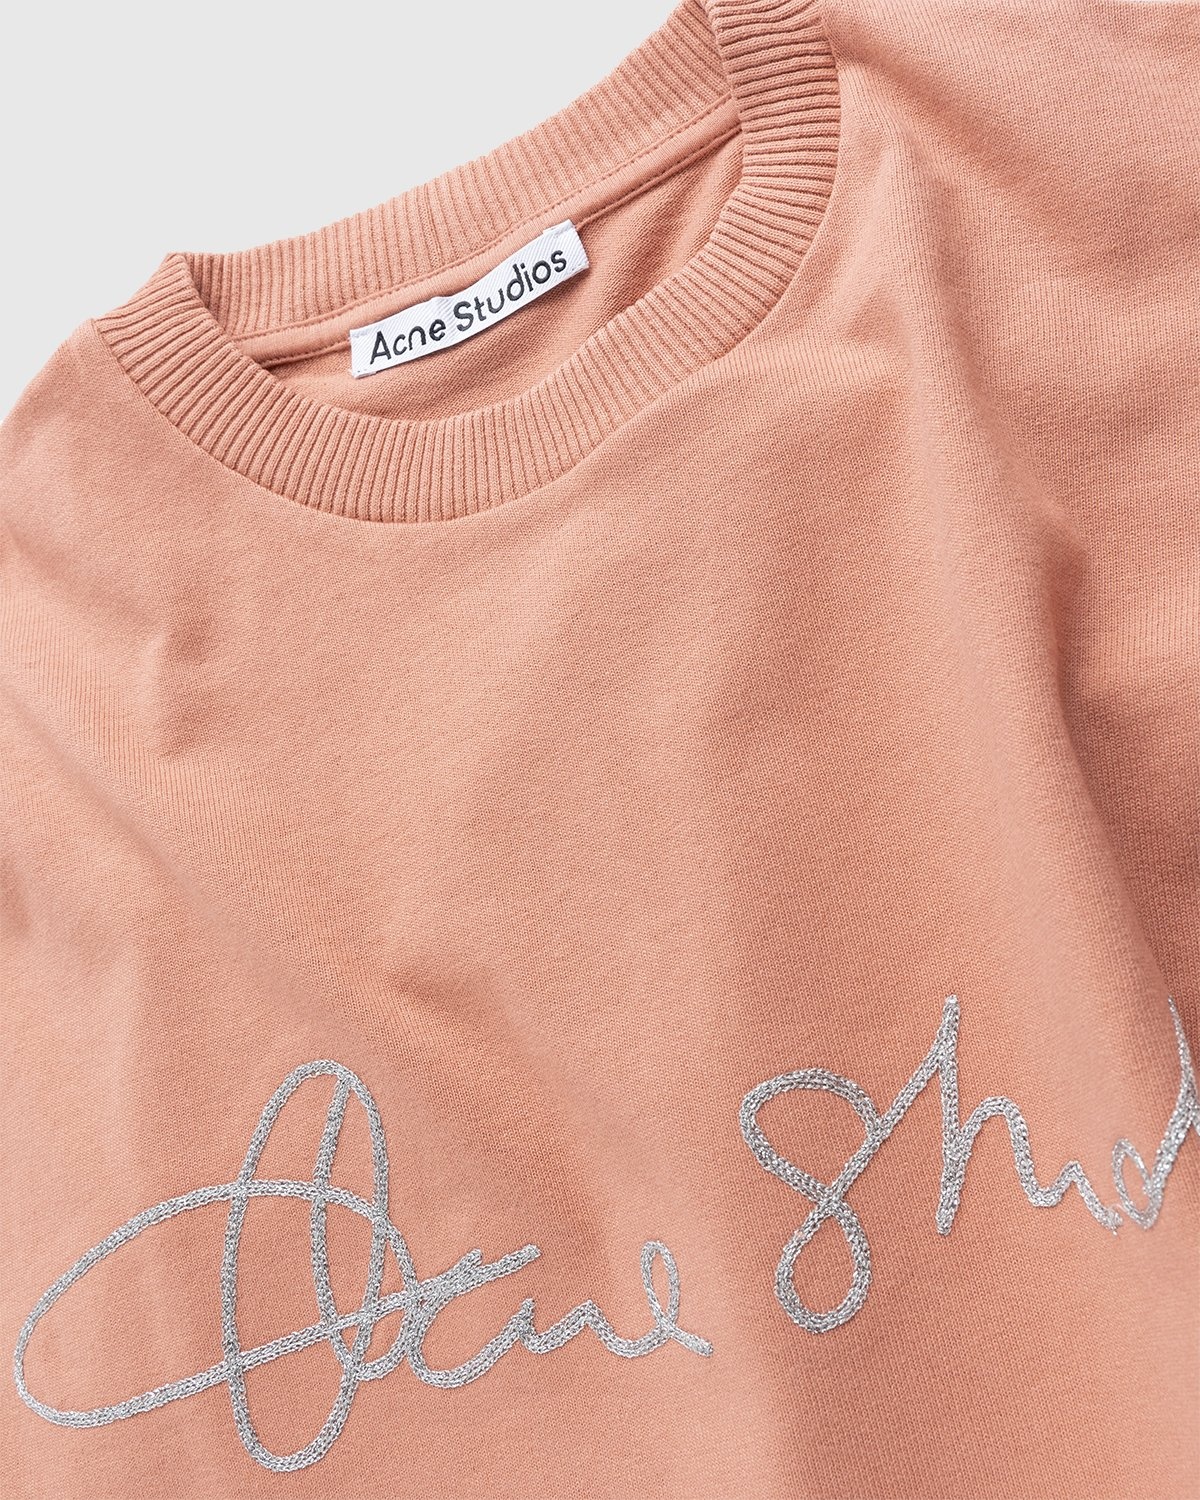 Acne Studios – Cotton Logo T-Shirt Old Pink - T-Shirts - Pink - Image 3